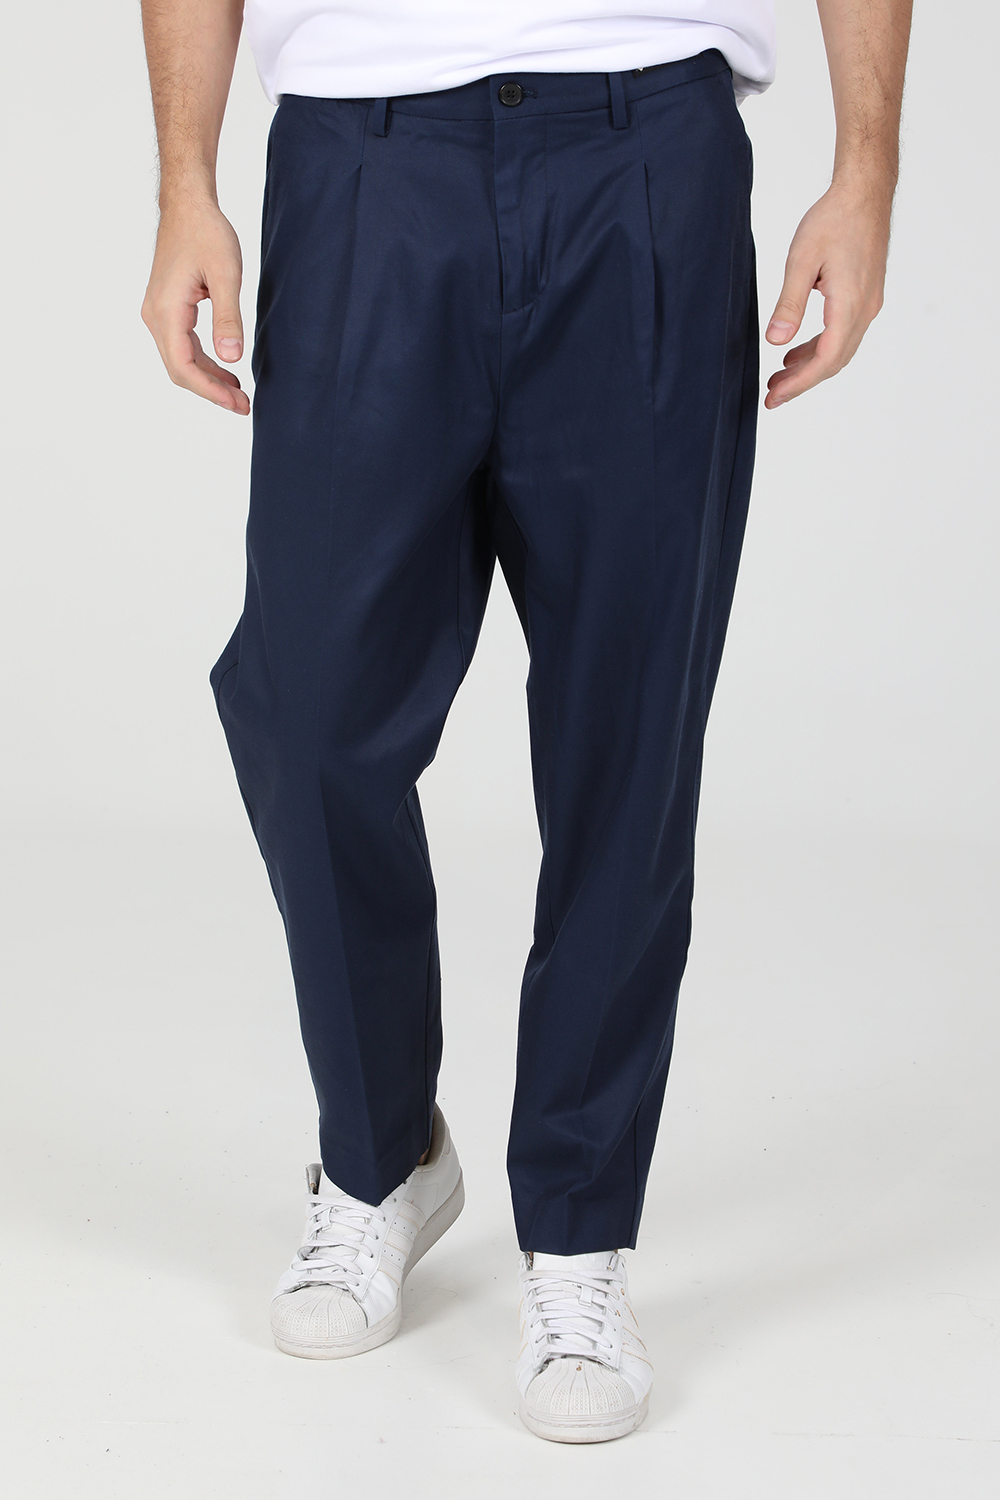 SCOTCH & SODA – Ανδρικό jean παντελόνι SCOTCH & SODA SEASONAL FIT- Pleated chino μπλε 1821027.0-001E